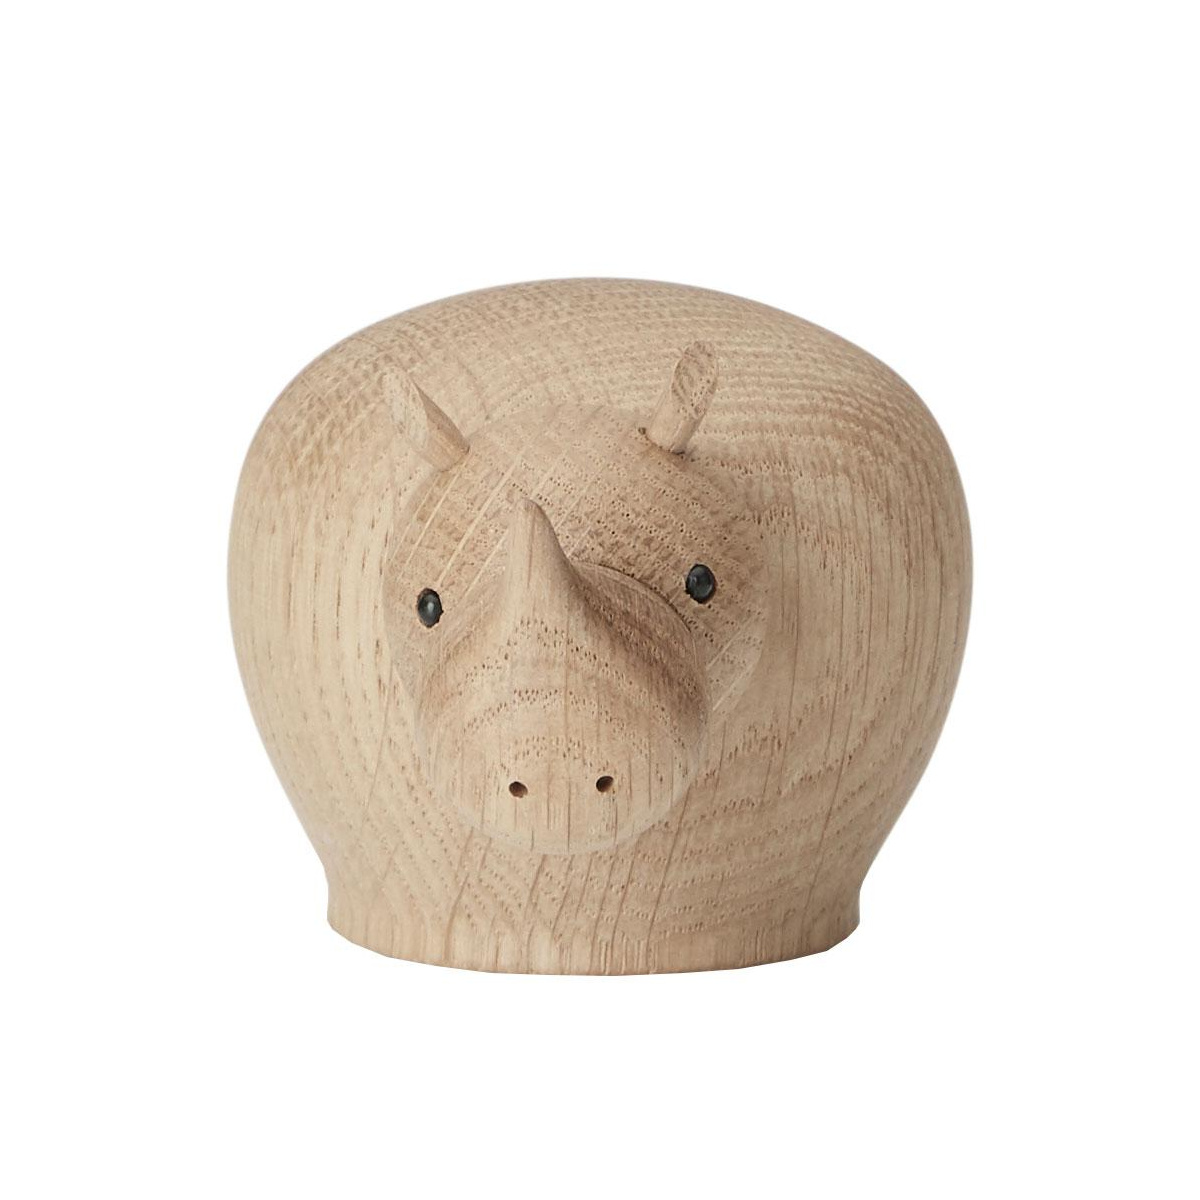 Woud - Rina Rhinoceros Holzfigur mini - eiche/matt lackiert/LxBxH 9,5x5,8x5,2cm von Woud